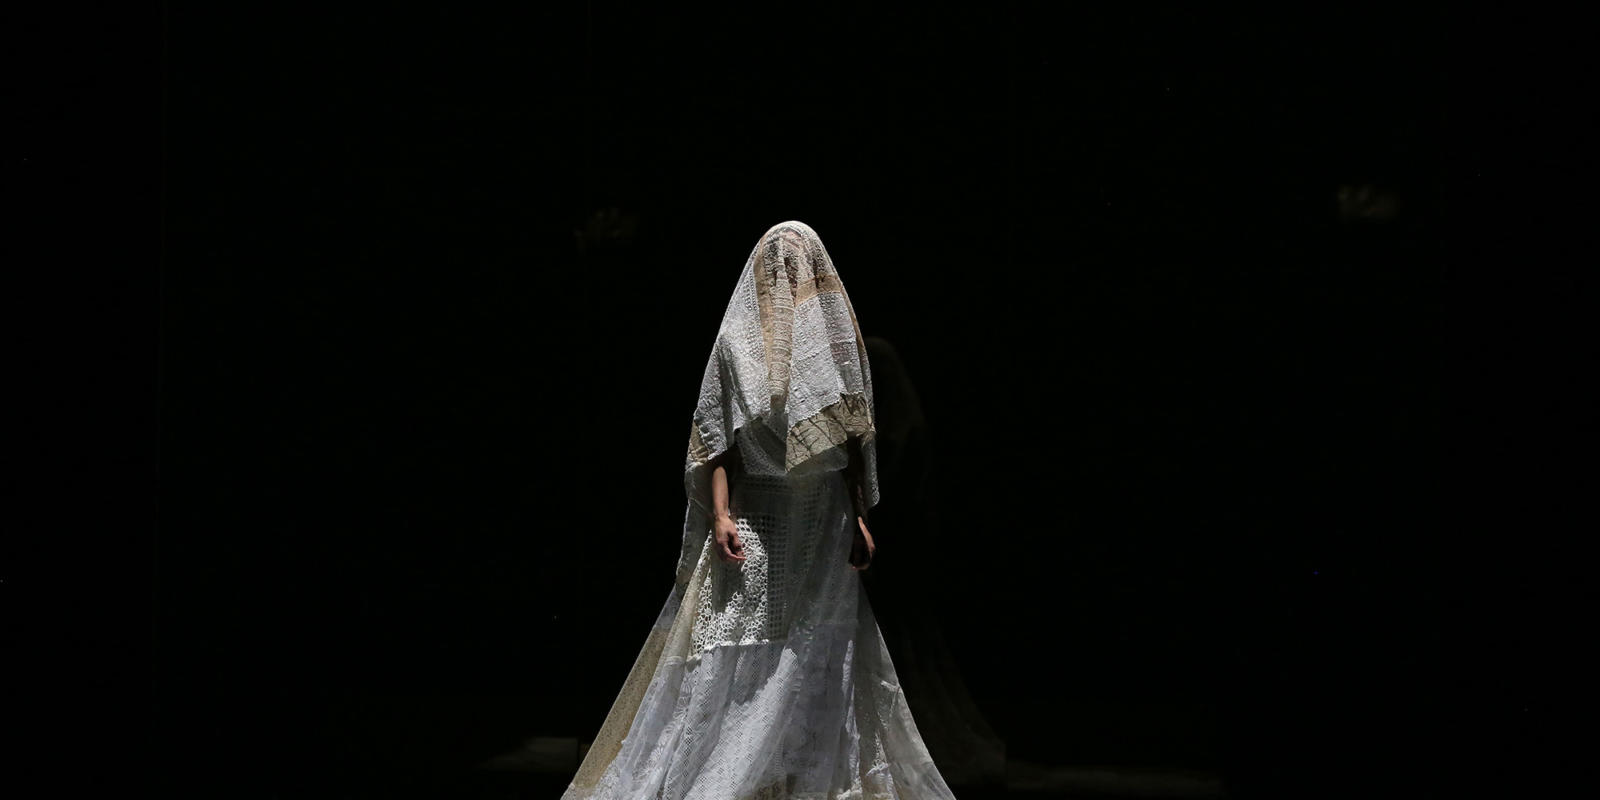 Sarah Tynan on stage in a wedding dress